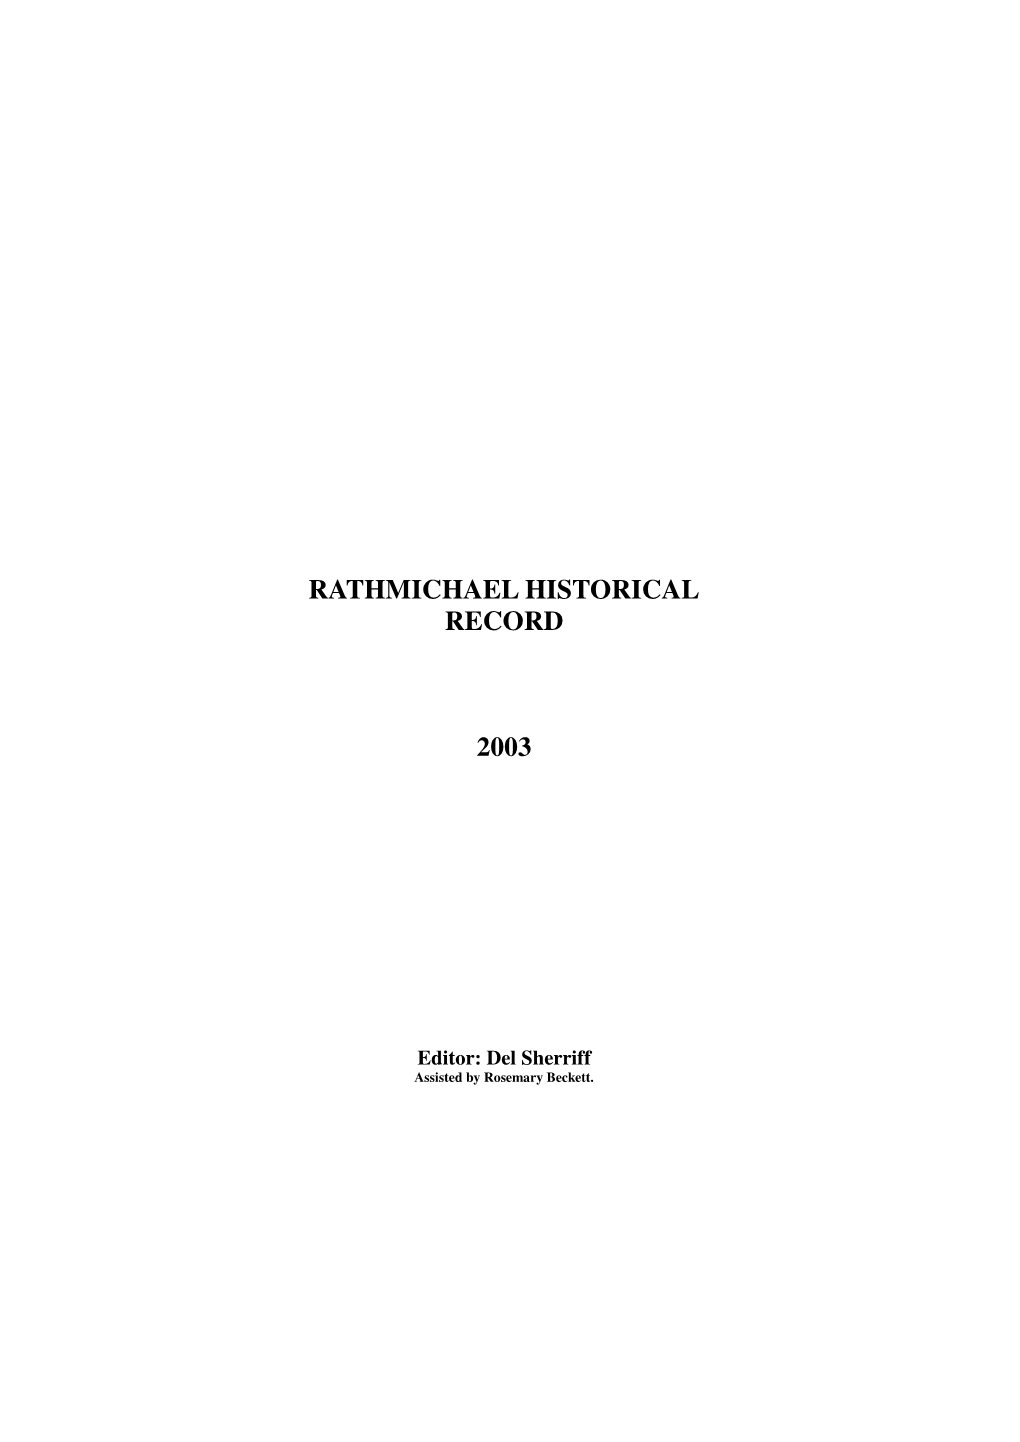 Rathmichael Historical Record 2003